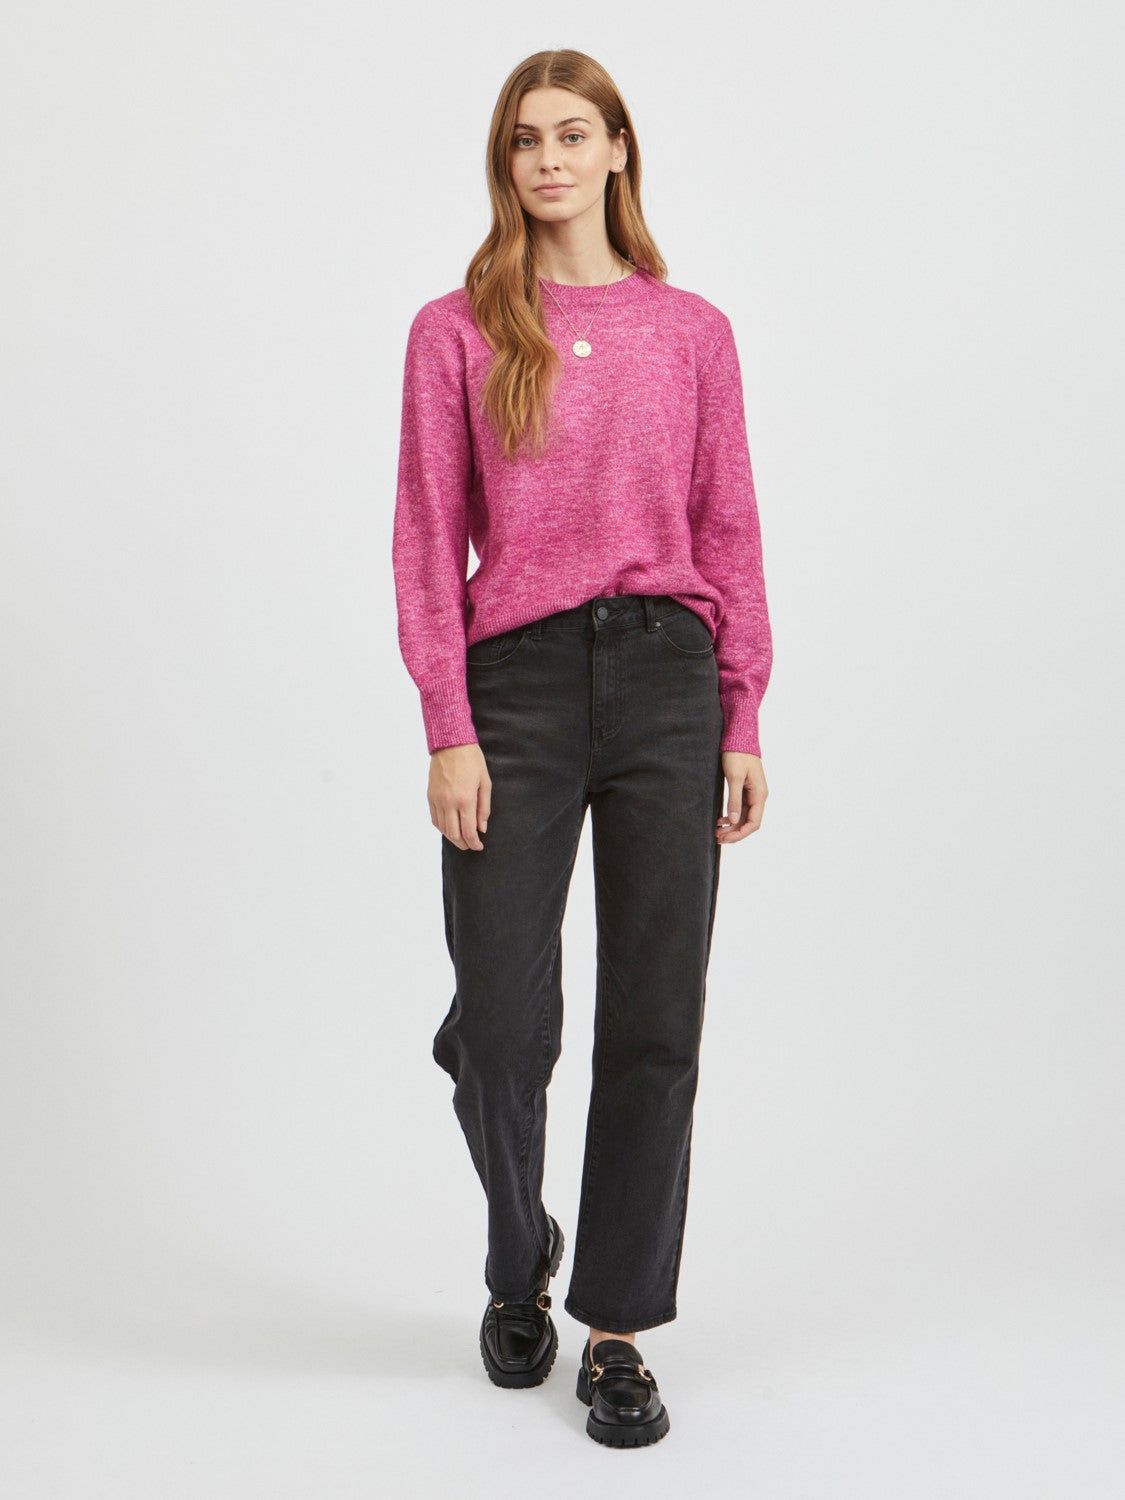 Viella Knitted Jumper (Pink)